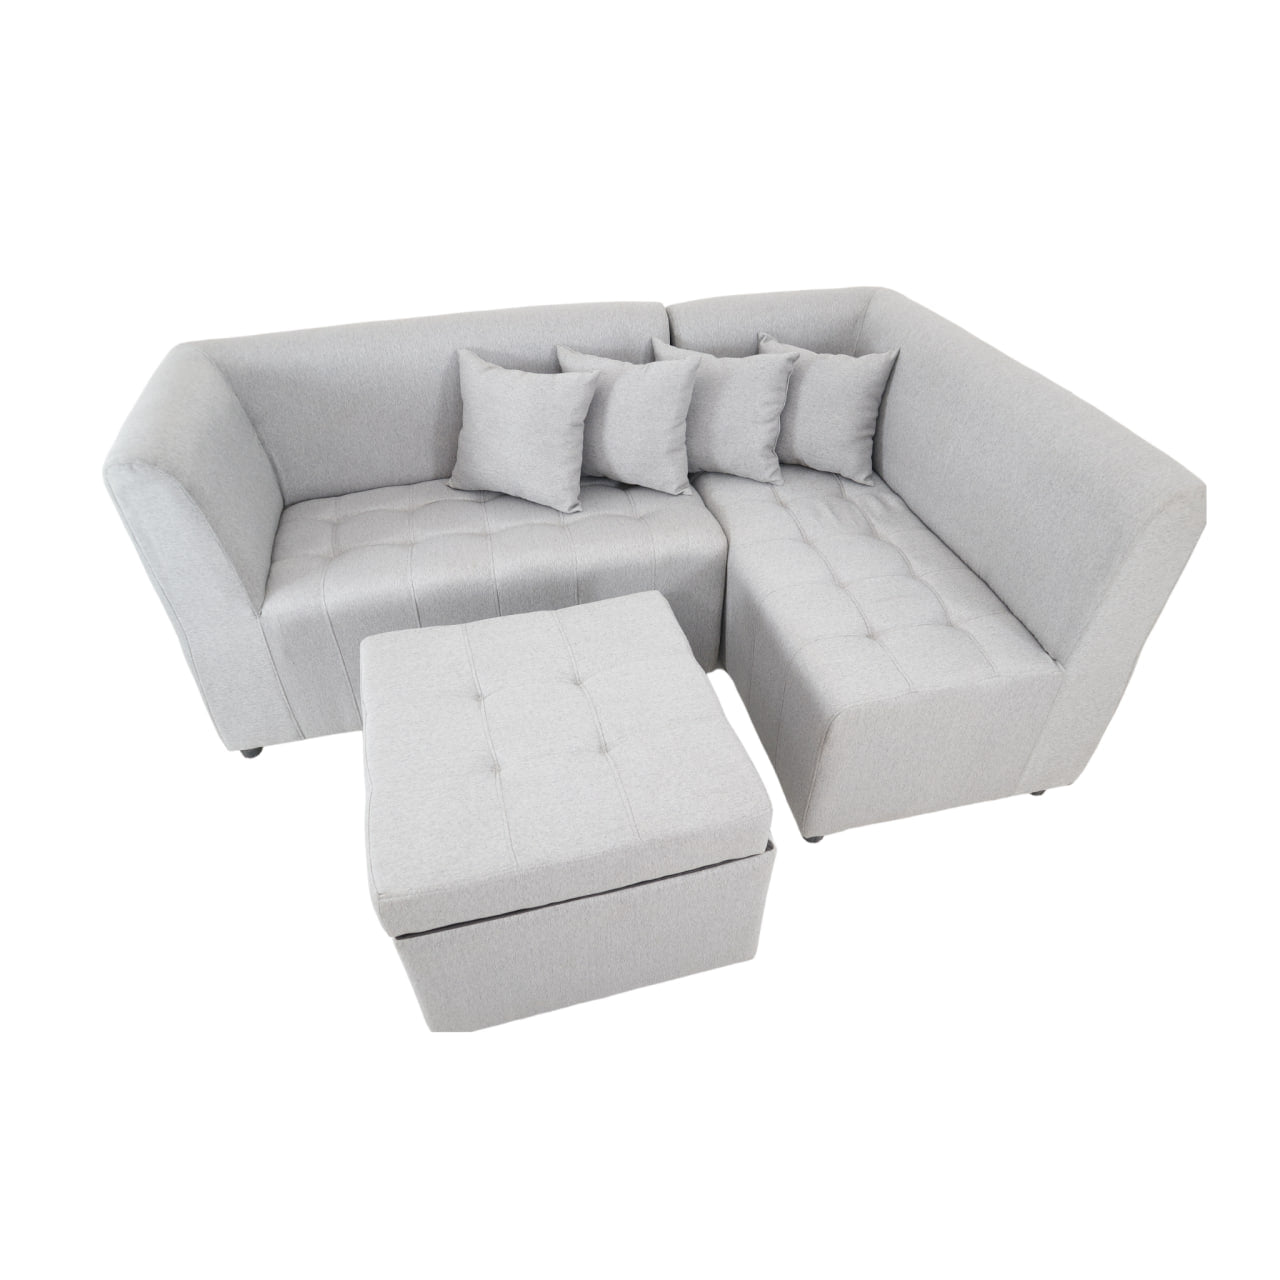 RONNA L-Shape Fabric Sofa w/ Storage Ottoman AF Home